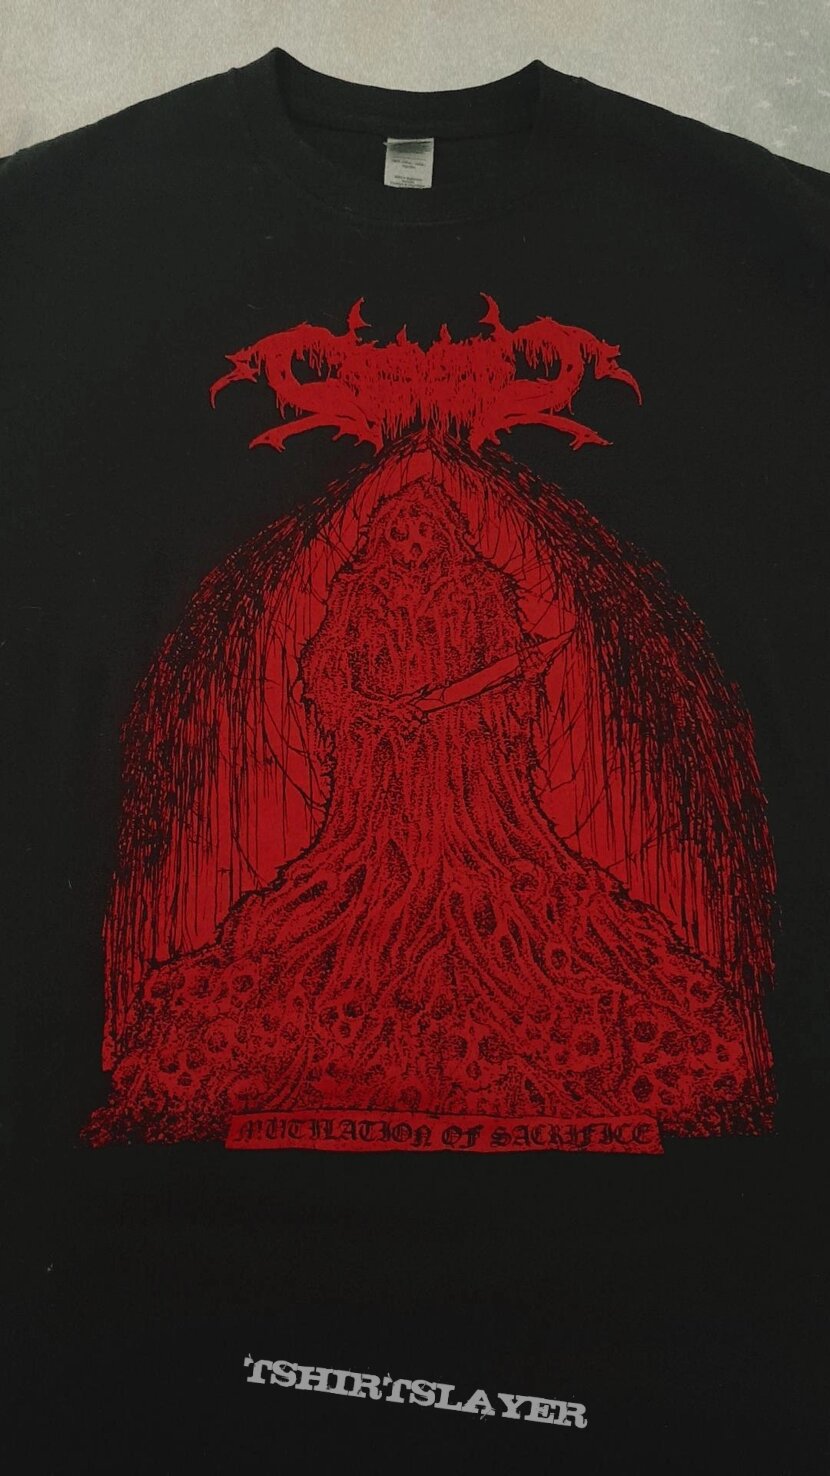 Ceremonial Bloodbath • Mutilation of Sacrifice | TShirtSlayer TShirt ...